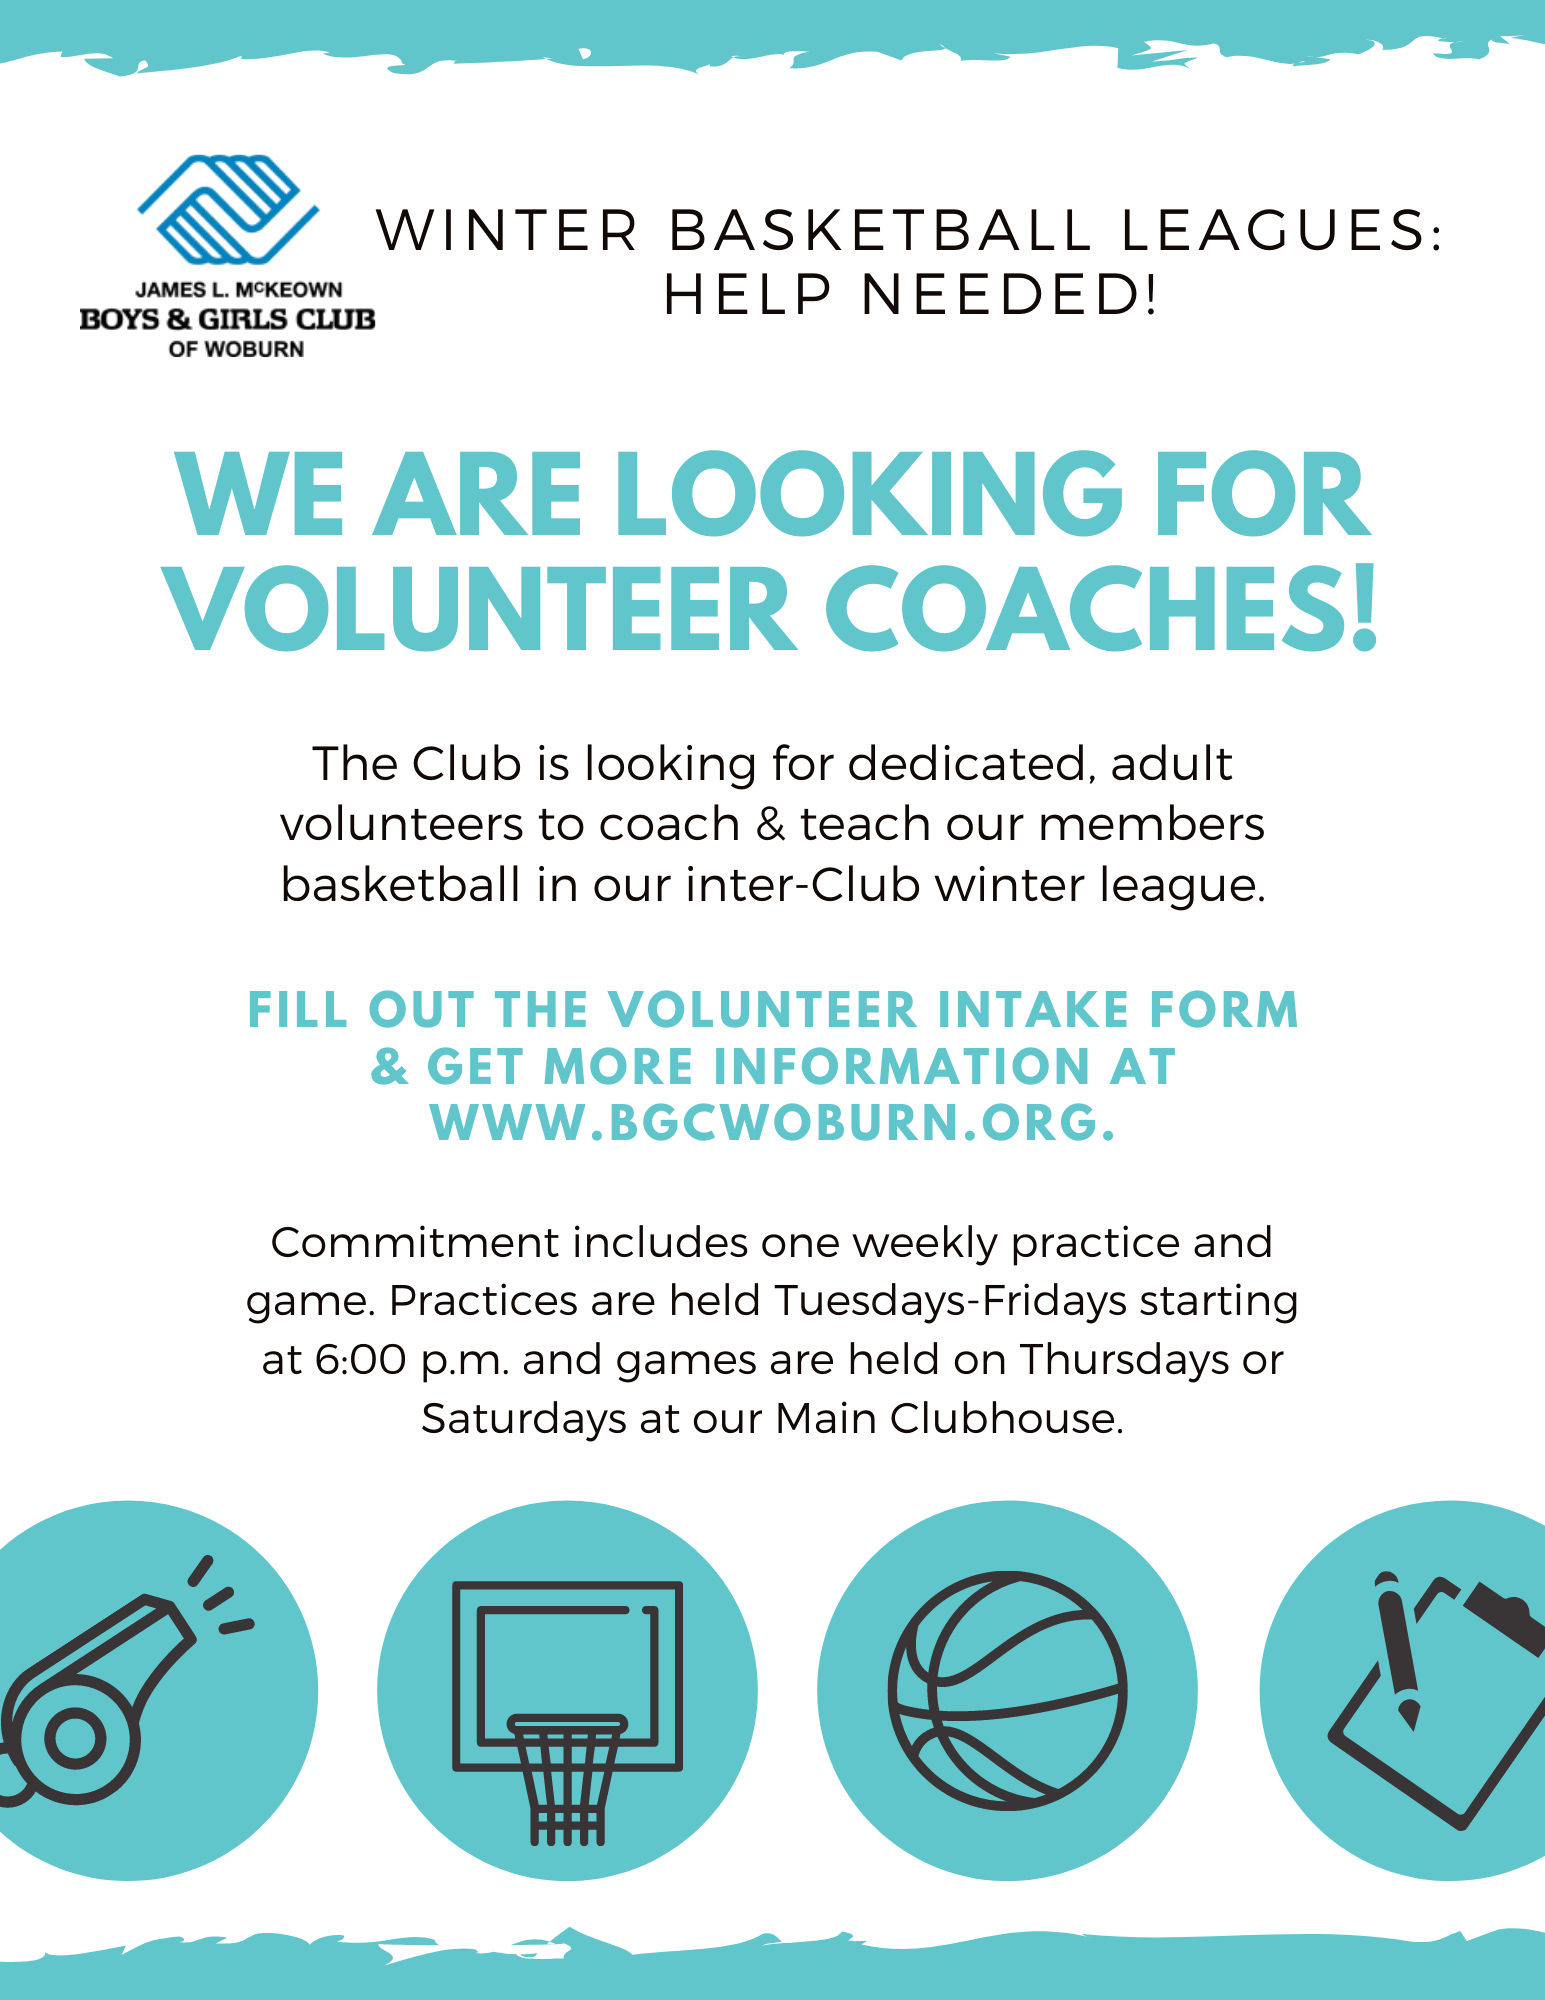 Volunteer Coaches Needed! James L. McKeown Boys & Girls Club of Woburn